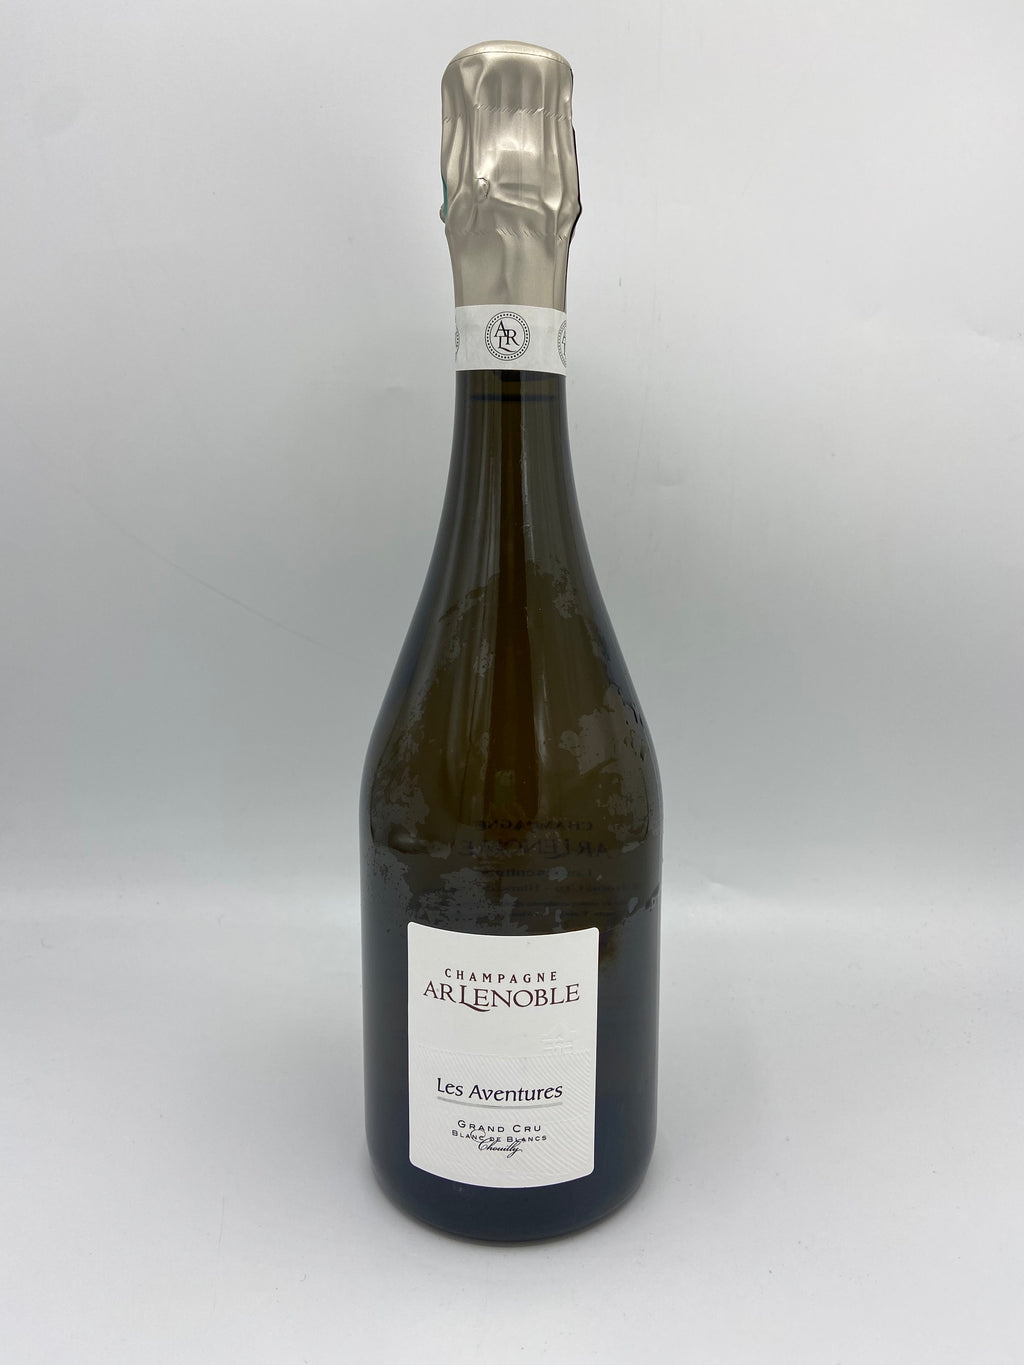 Champagne Grand Cru Blanc des Blancs "Les Aventures" Extra Brut - AR Lenoble